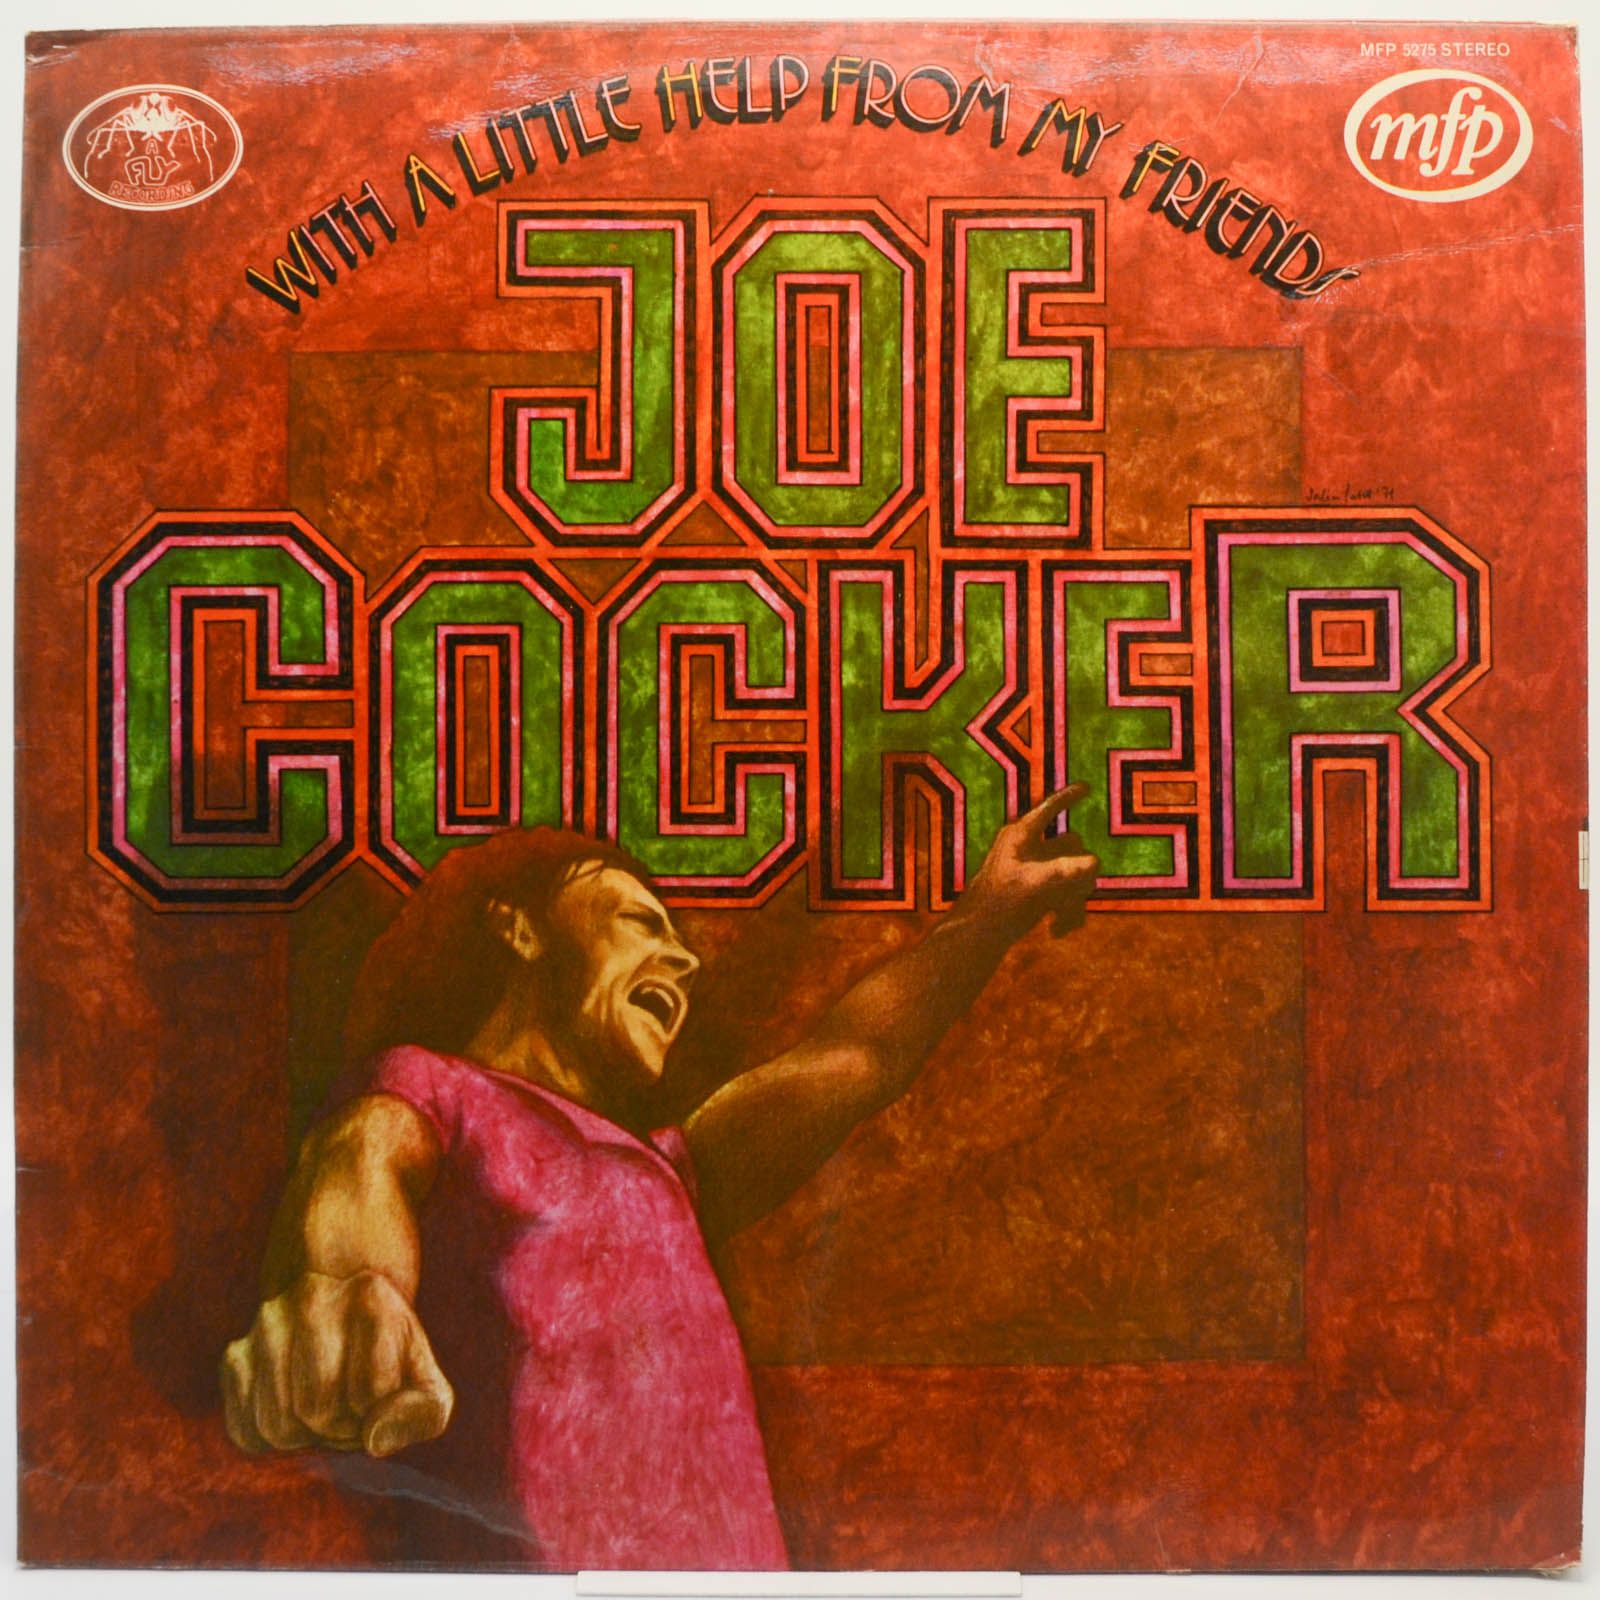 Joe Cocker — With A Little Help From My Friends (UK), 1971